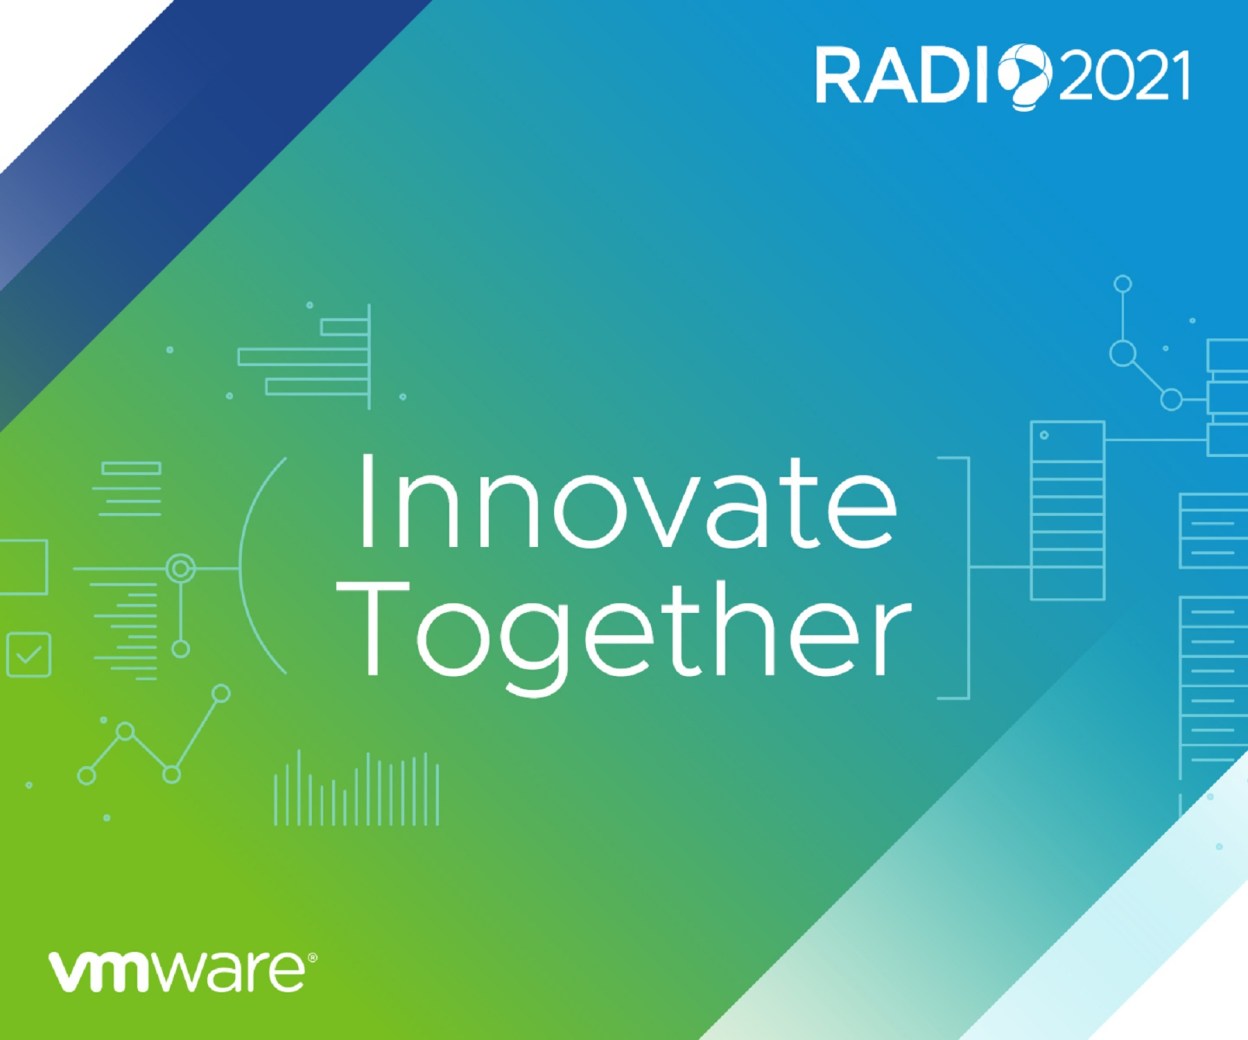 RADIO 2021 "Innovate Together" Banner